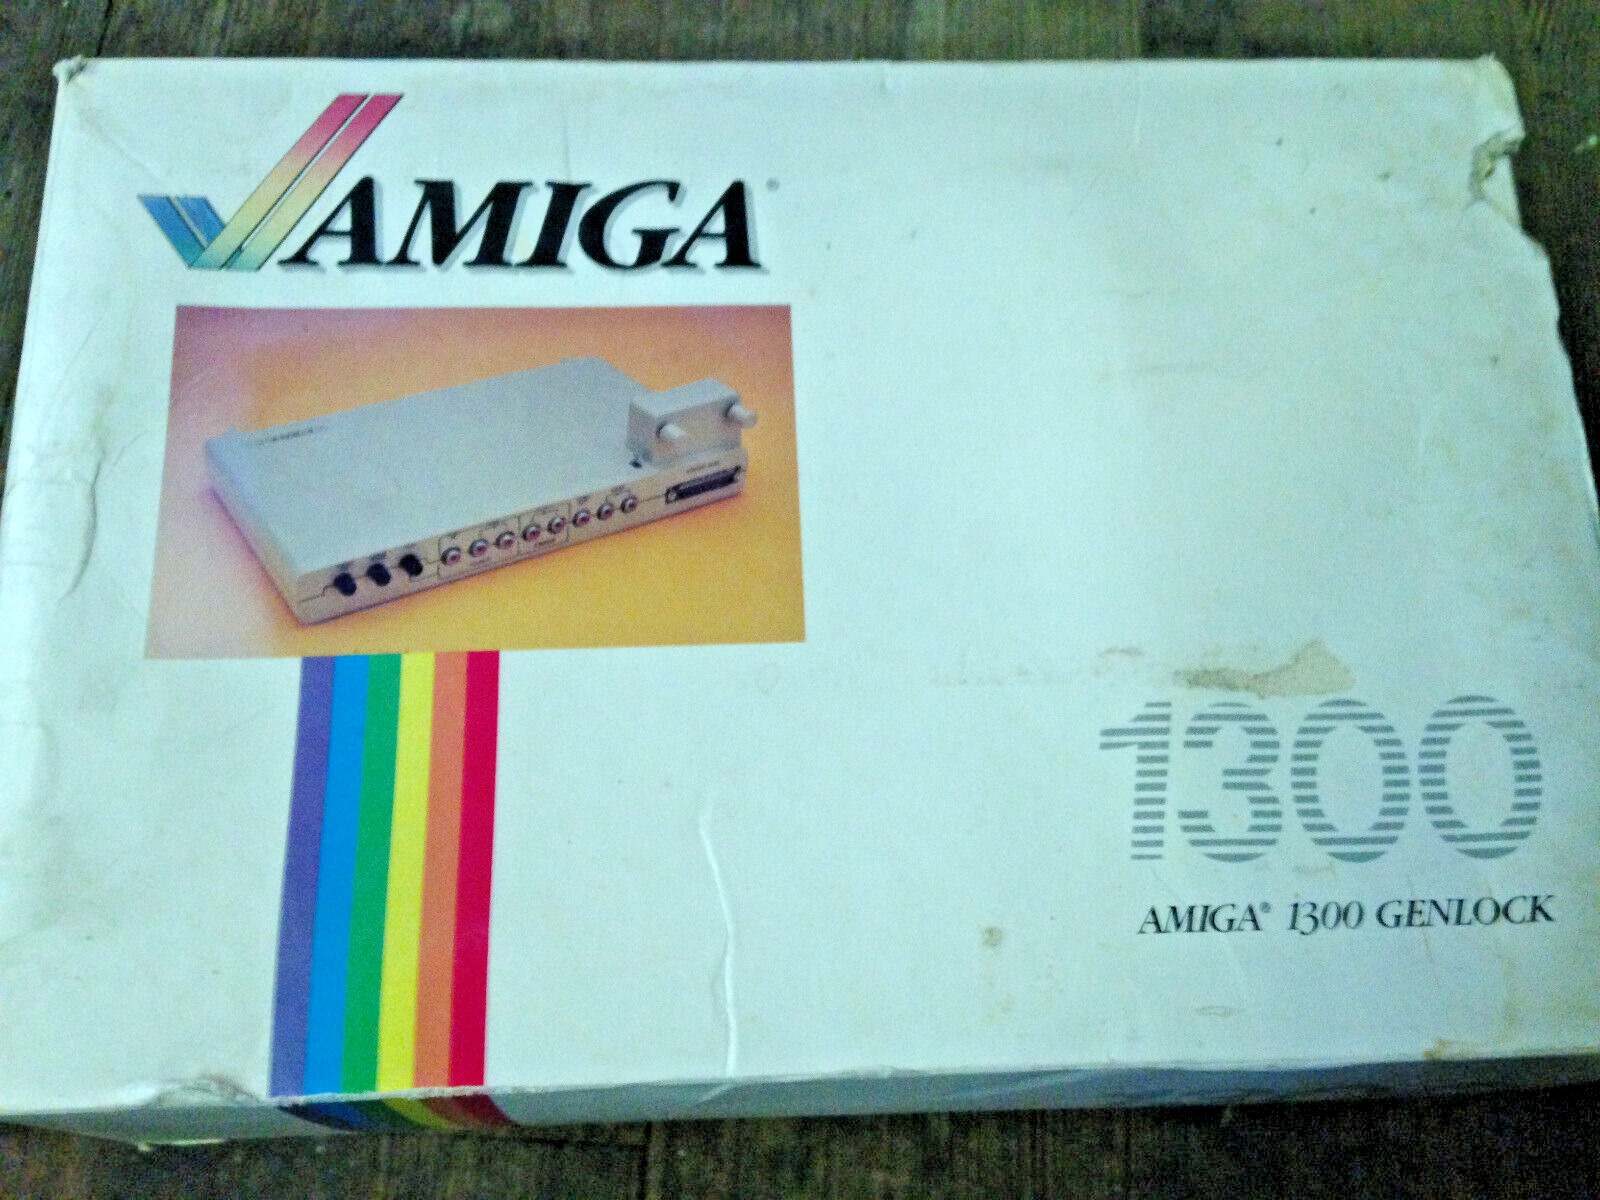 Commodore Amiga 1000 Genlock 1300 Interface, original box